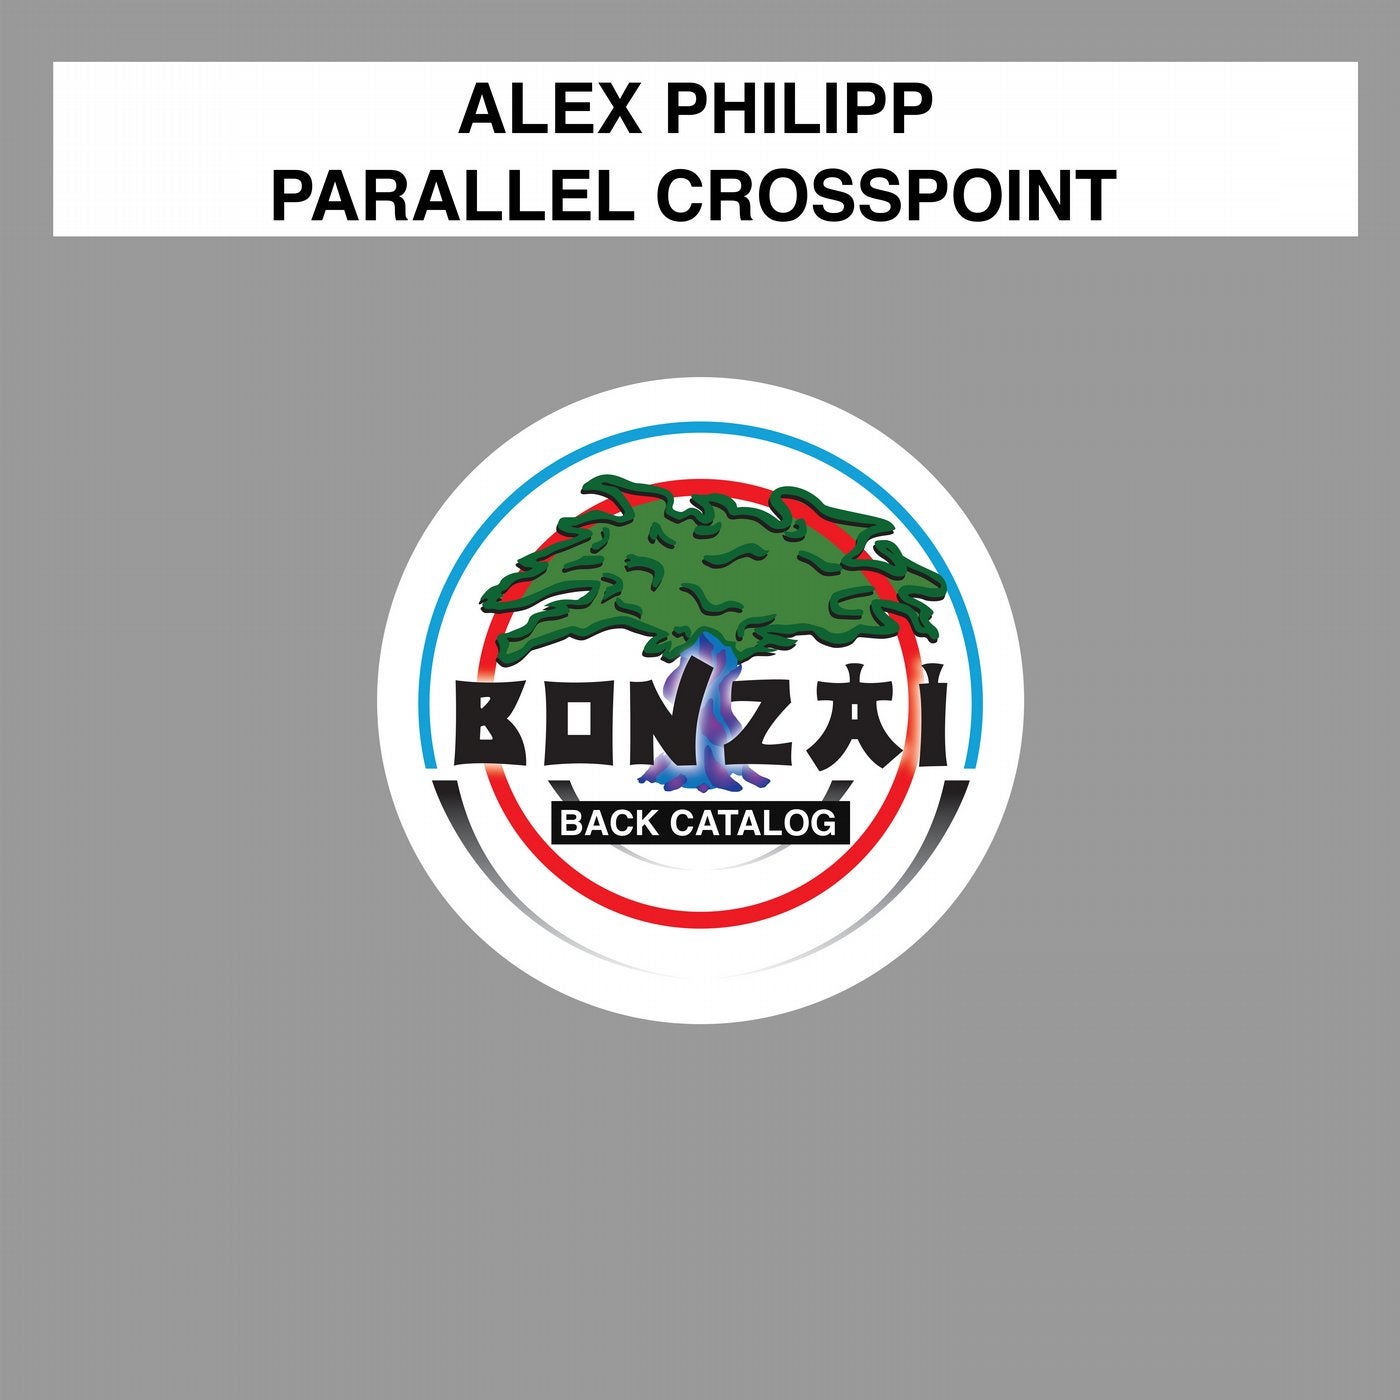 Parallel Crosspoint